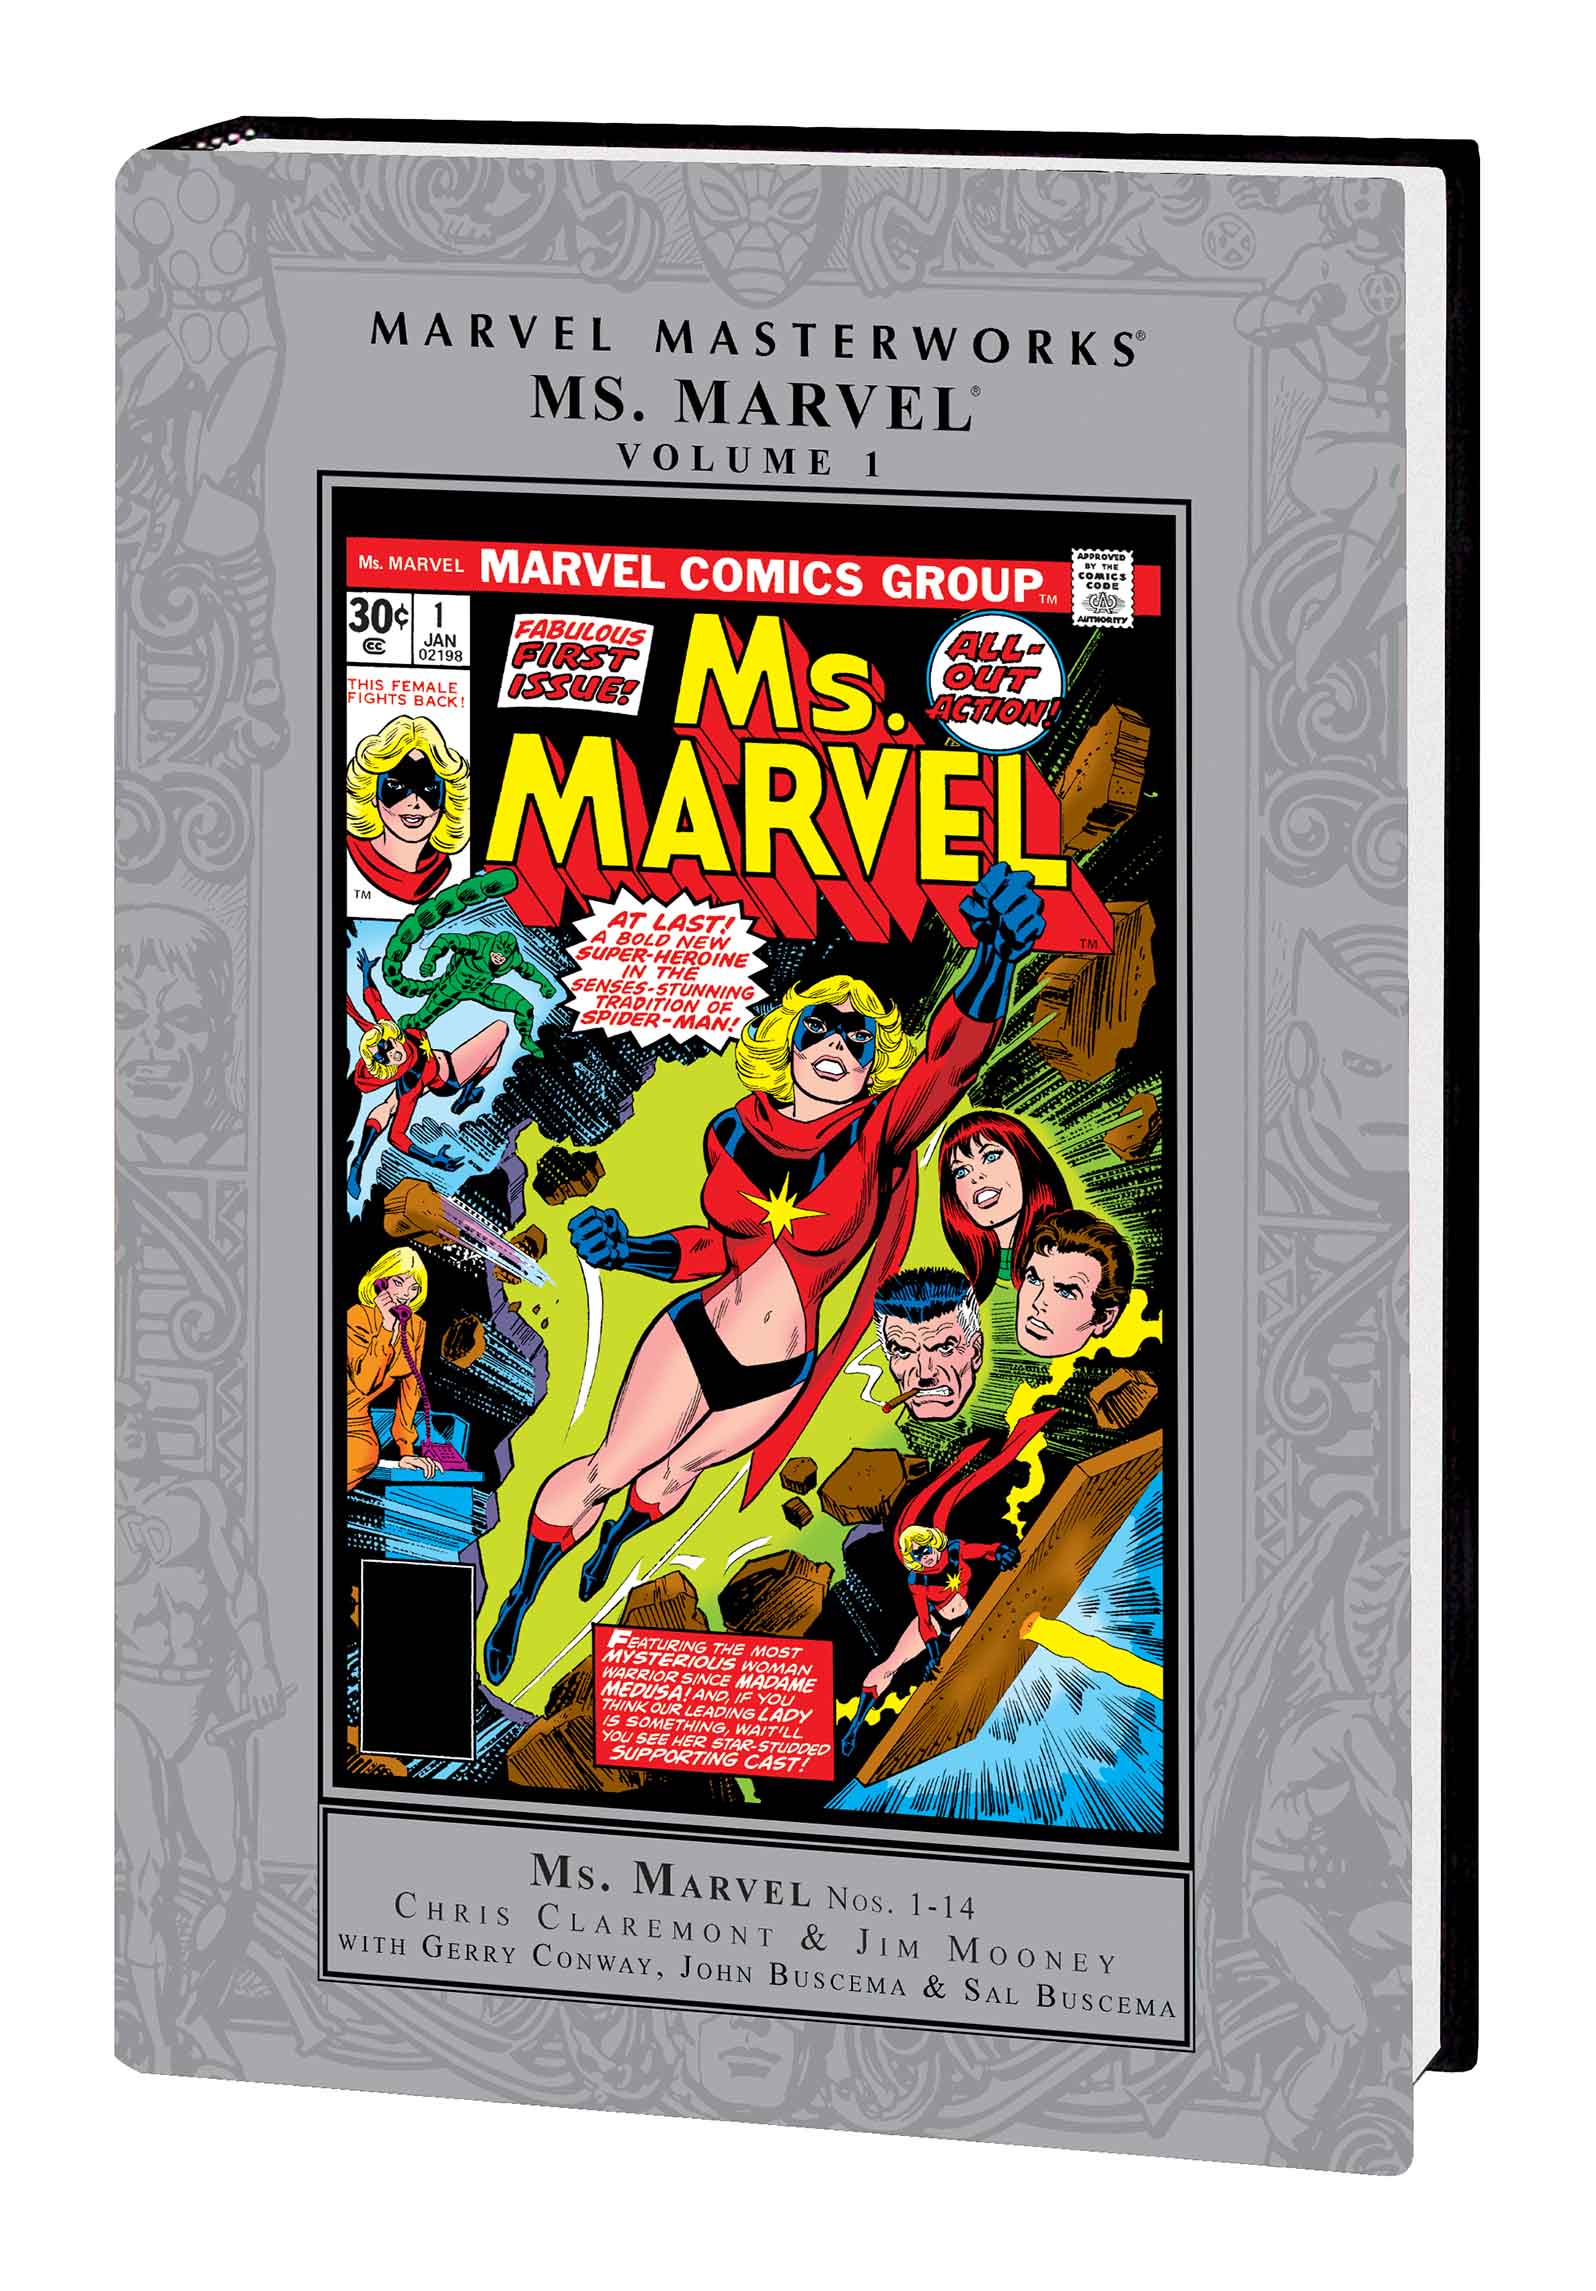 Marvel Masterworks: Ms. Marvel (Hardcover)